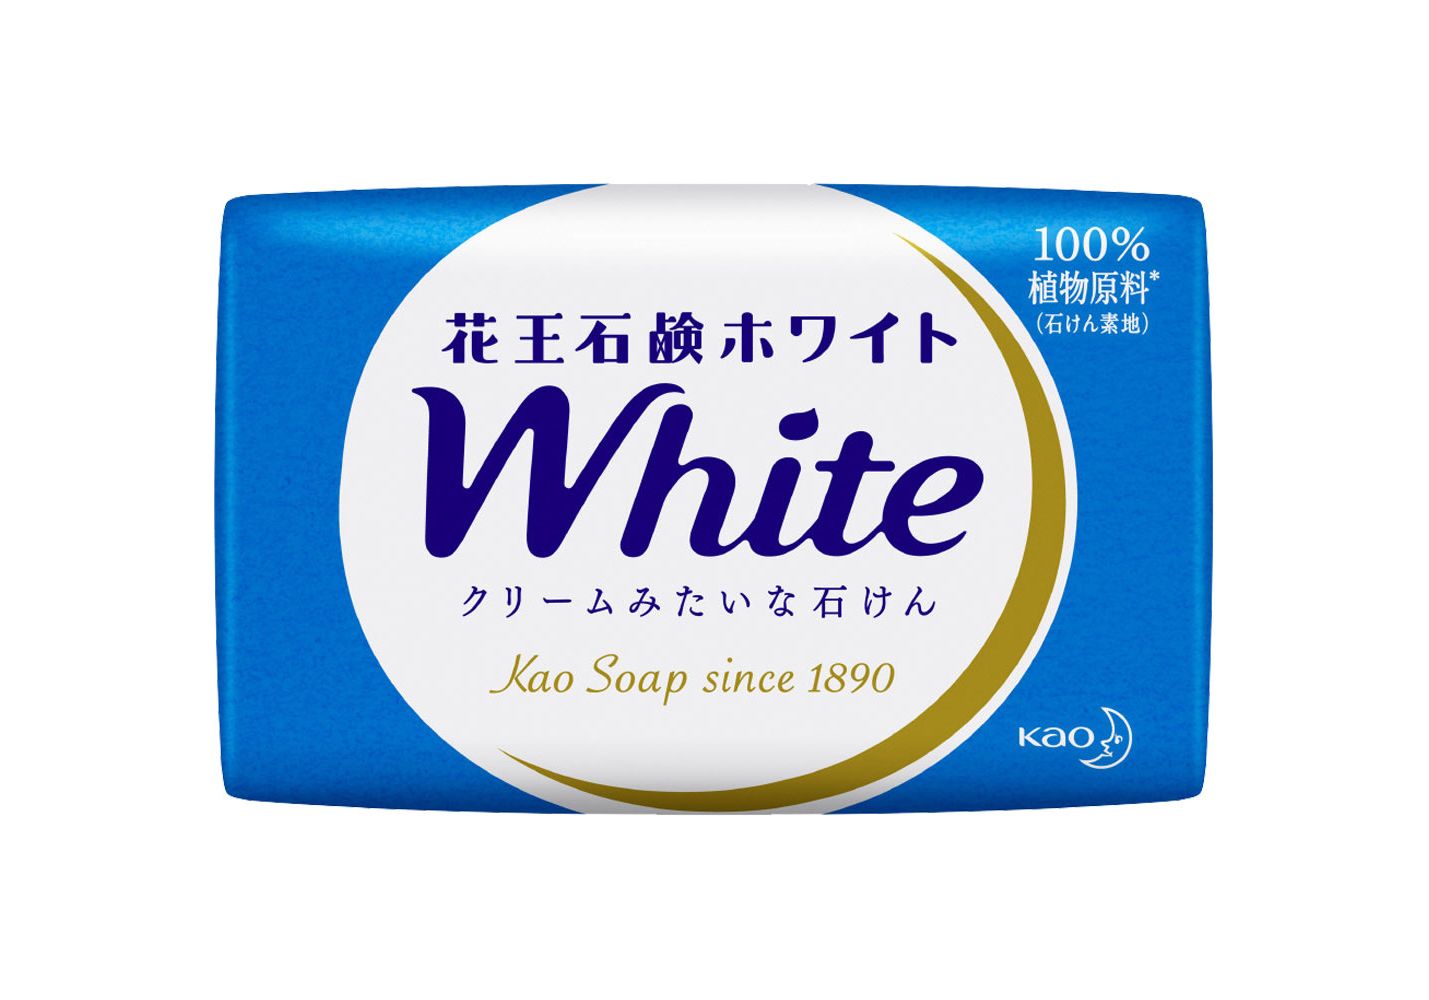 Увлажняющее крем-мыло для тела MegRhythm KAO White с ароматом белых цветов, 85г х 6шт.